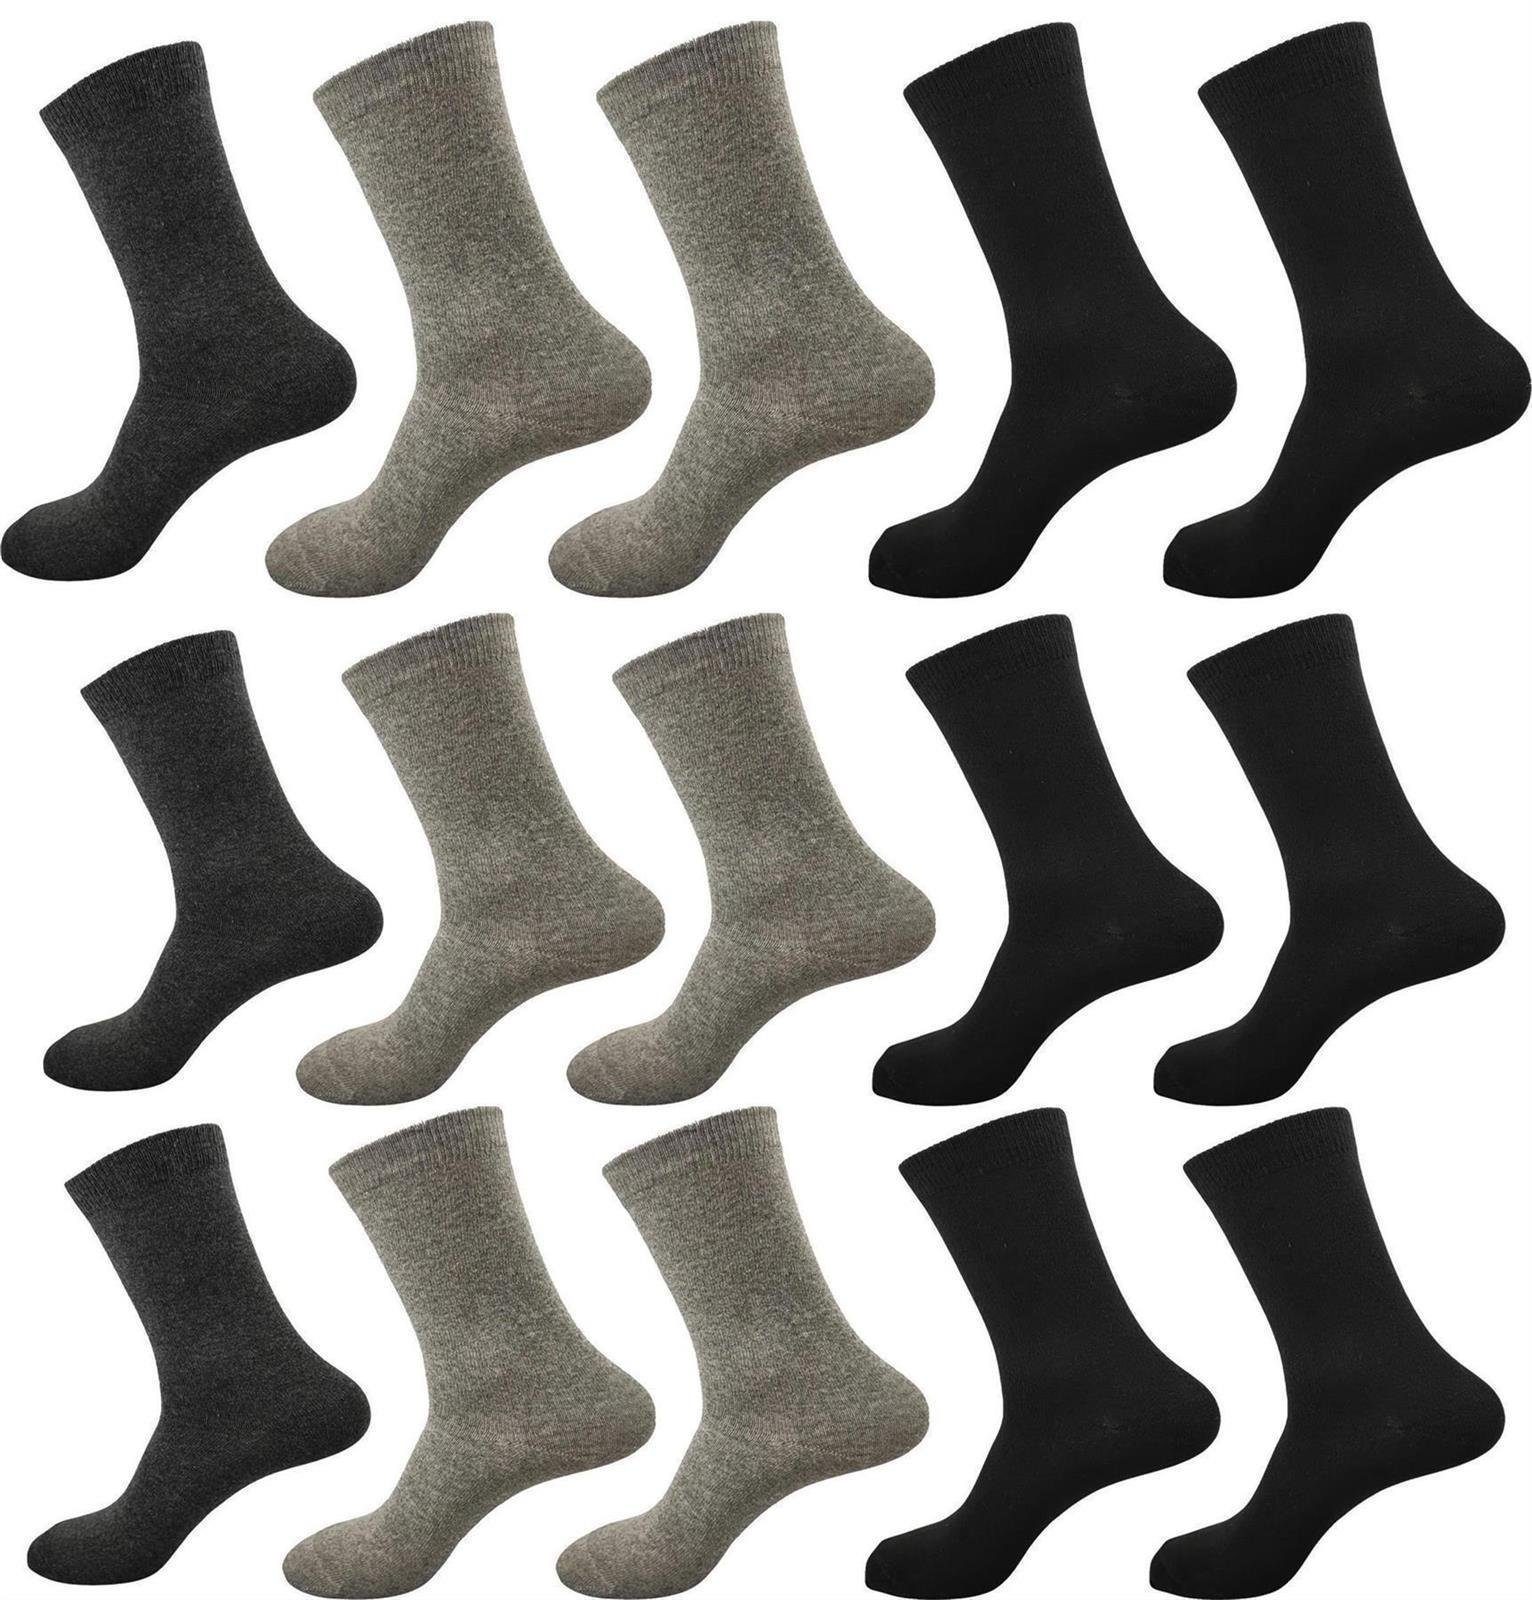 EloModa Basicsocken 5, 10, 15, 20 Paar Herren Business Socken Baumwolle ohne Gummi, (15-Paar)